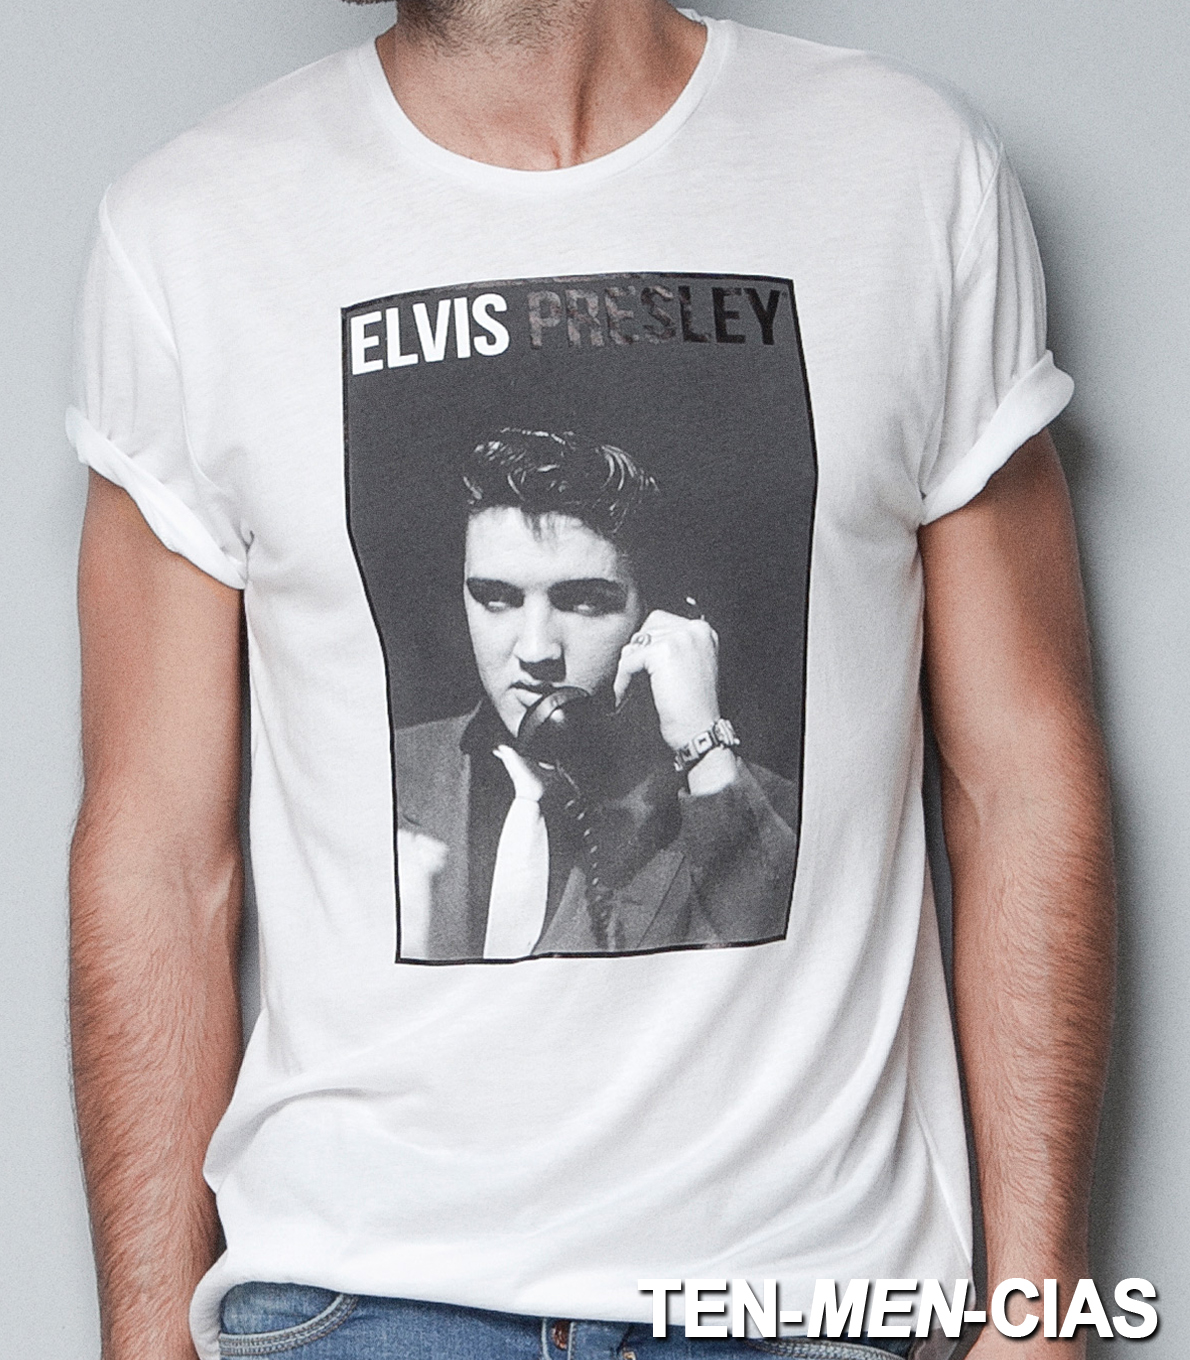 TEN-MEN-CIAS: ZARA Camisetas Elvis